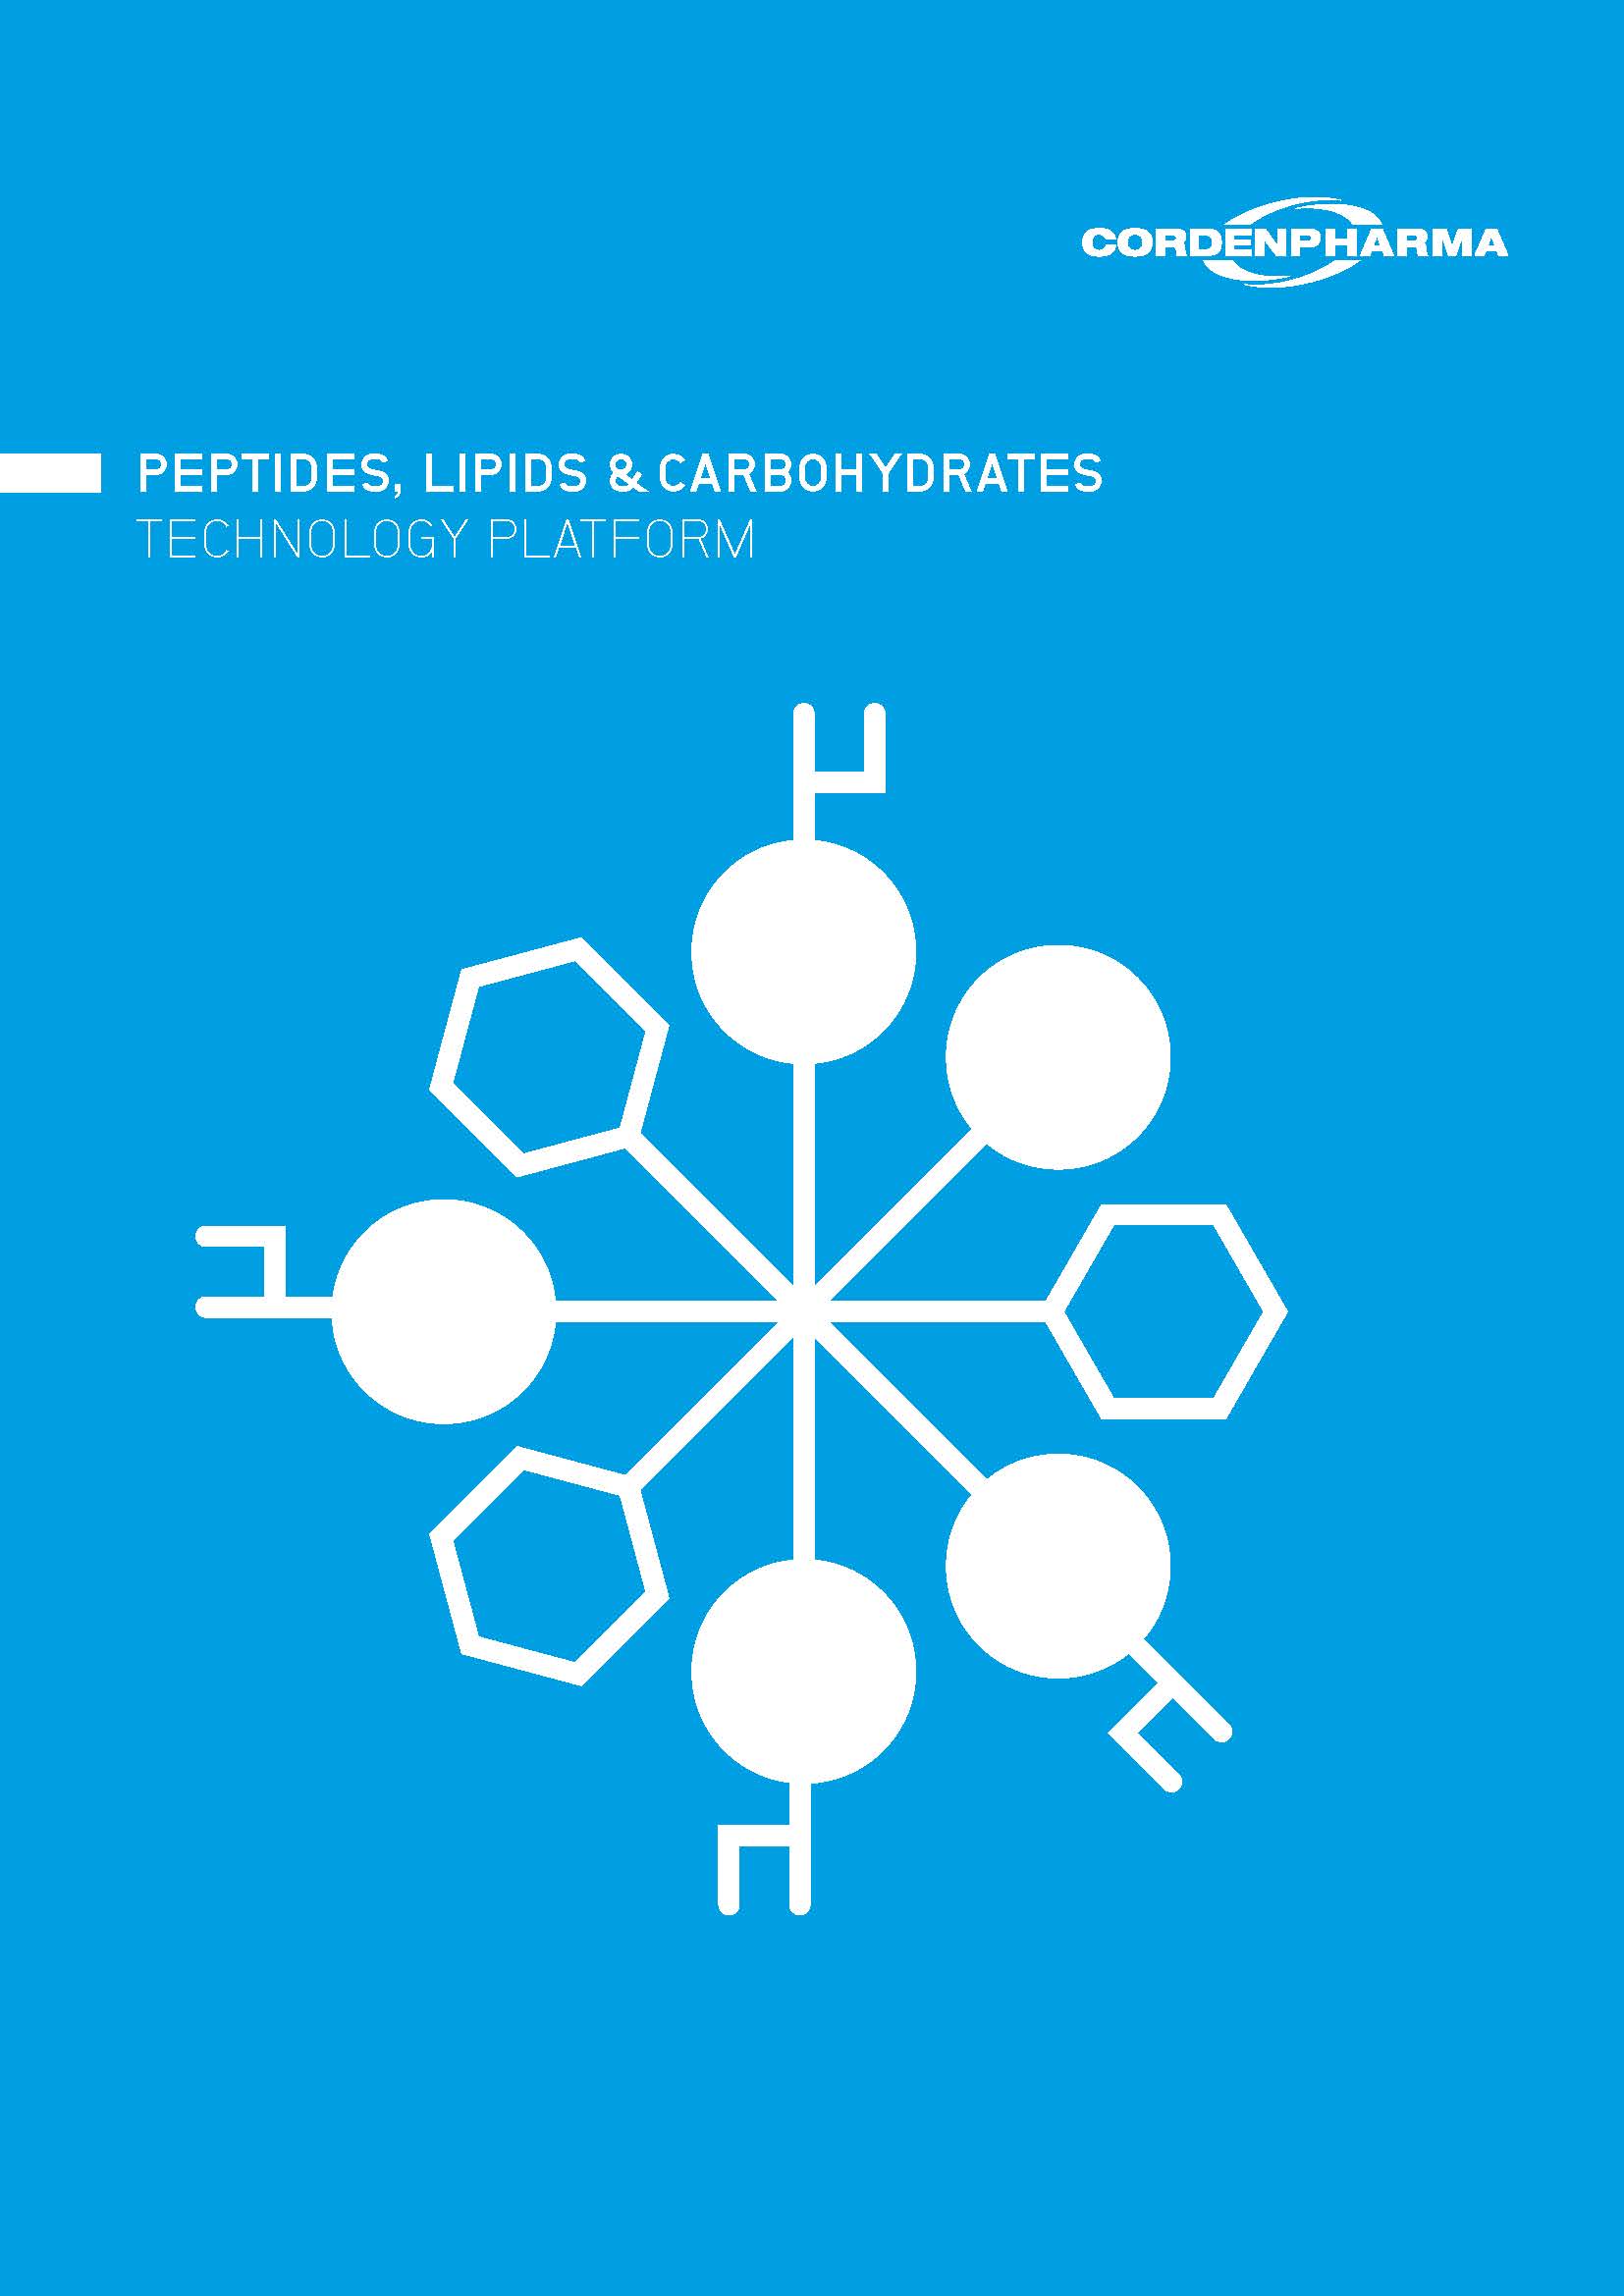 Brochure > CordenPharma Peptides, Lipids & Carbohydrates Technology Platform